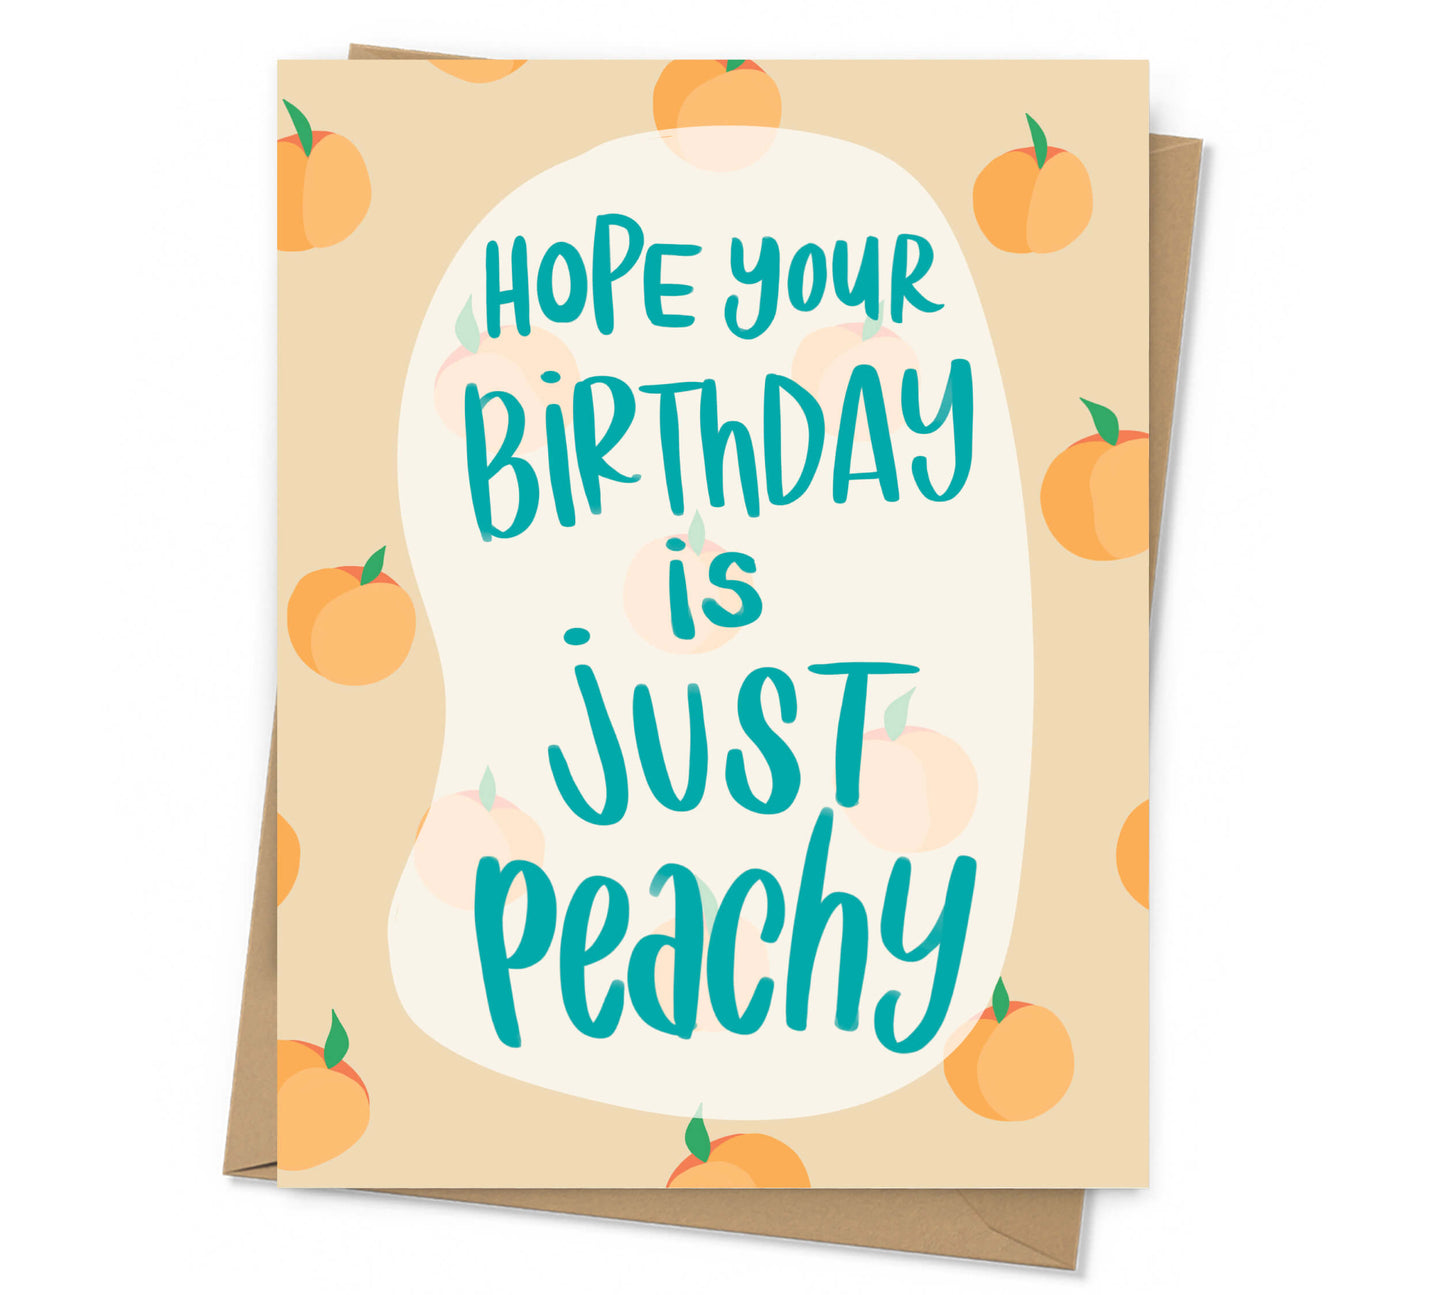 Just Peachy Birthday Card